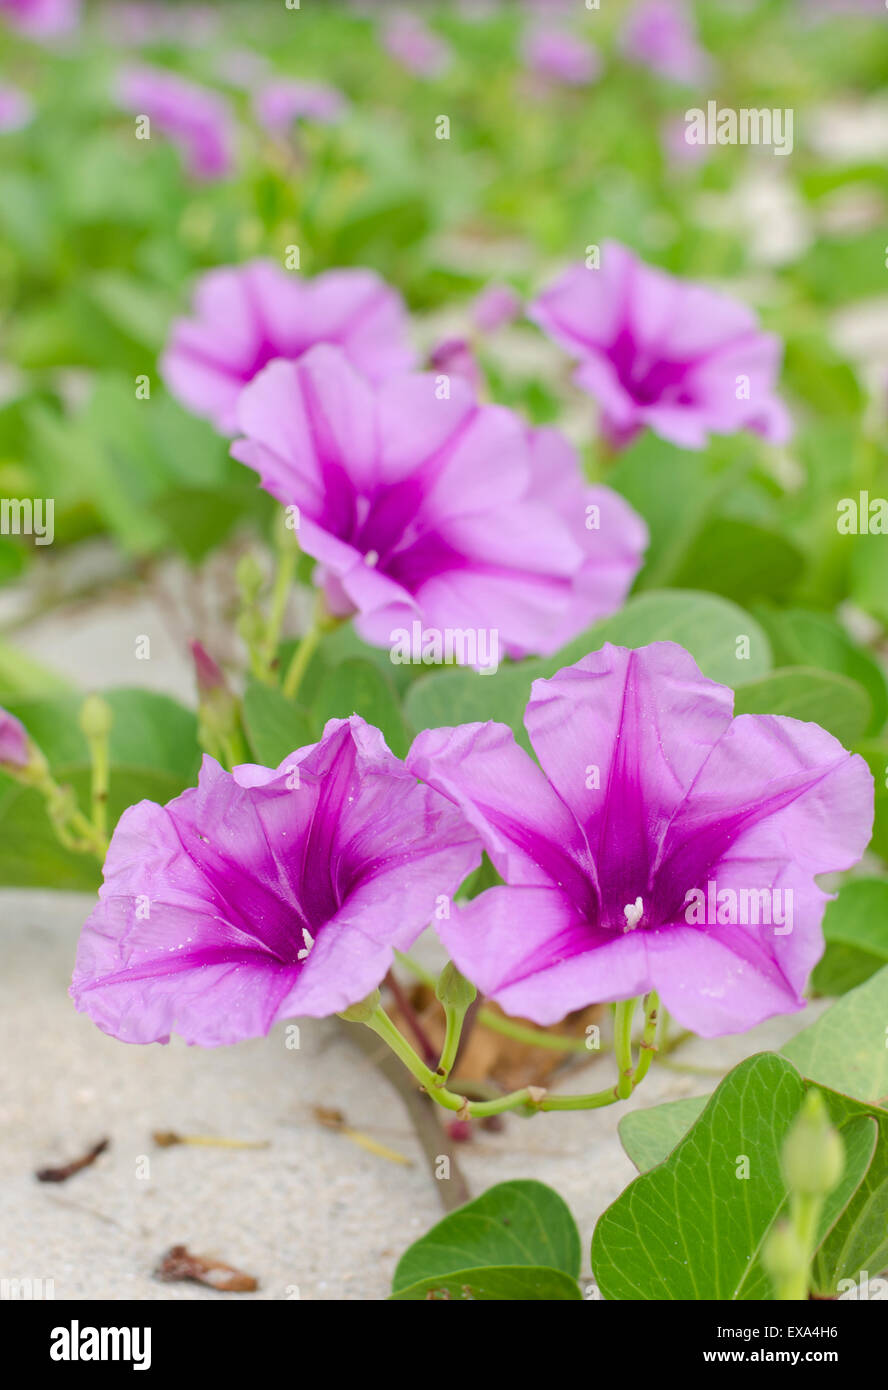 Ipomoea flowers on the beaches of Thailand. Stock Photo